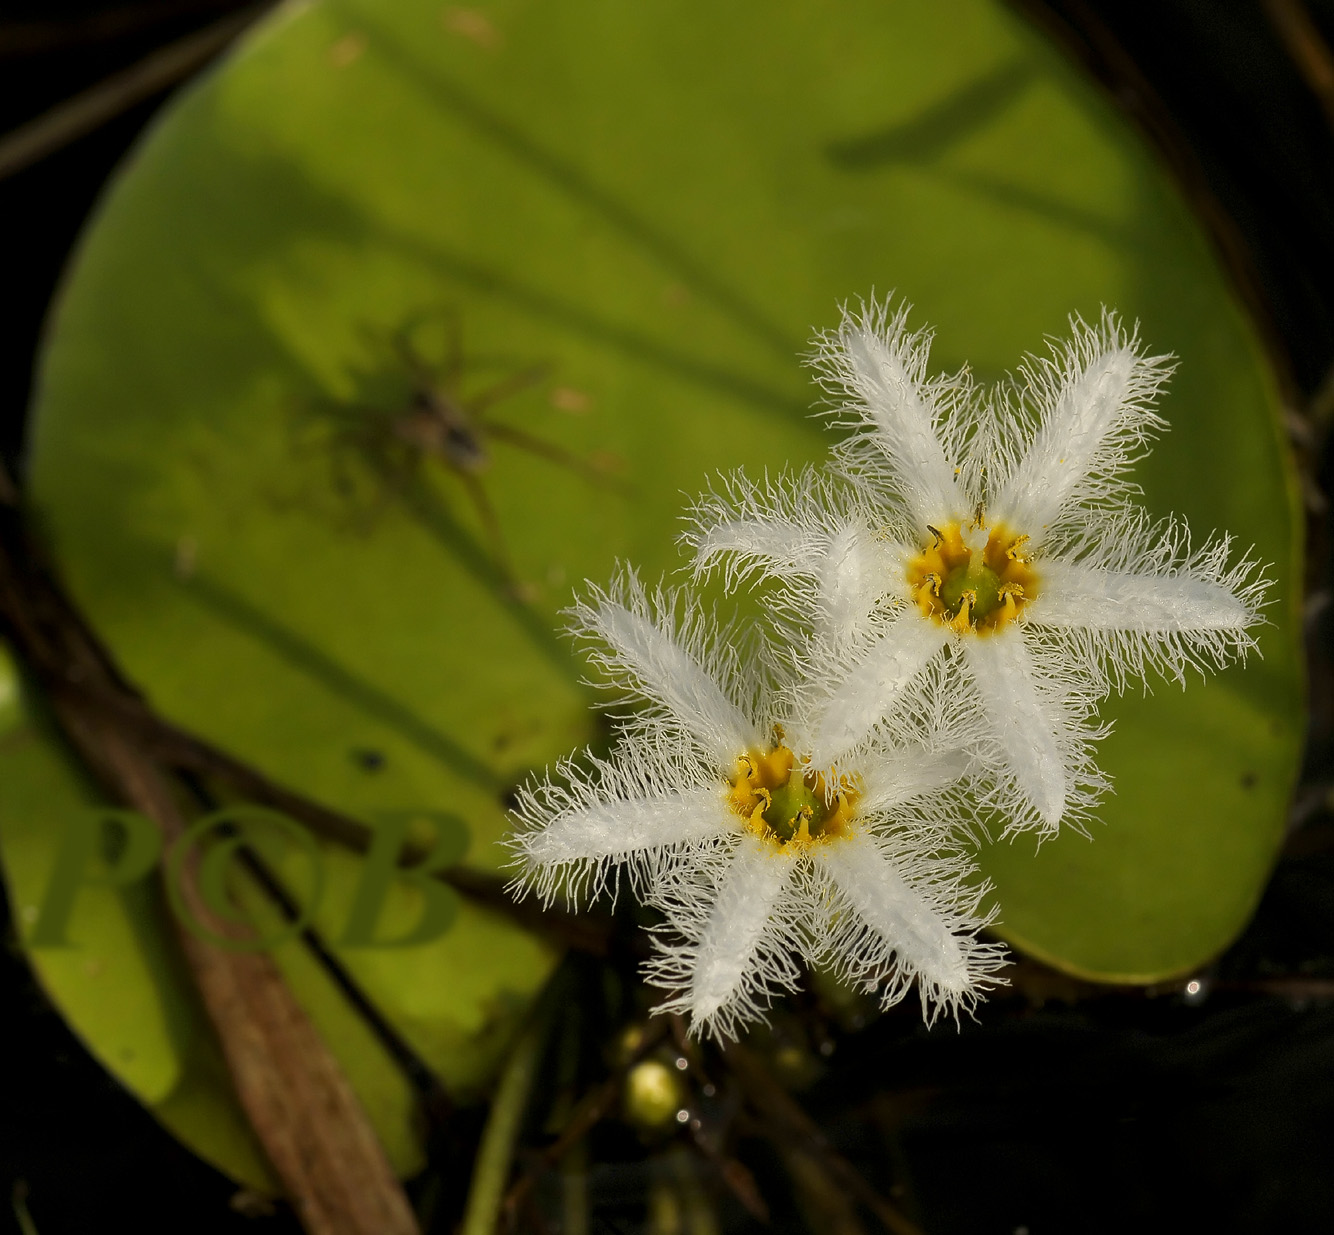 Ricefield aquatic flower